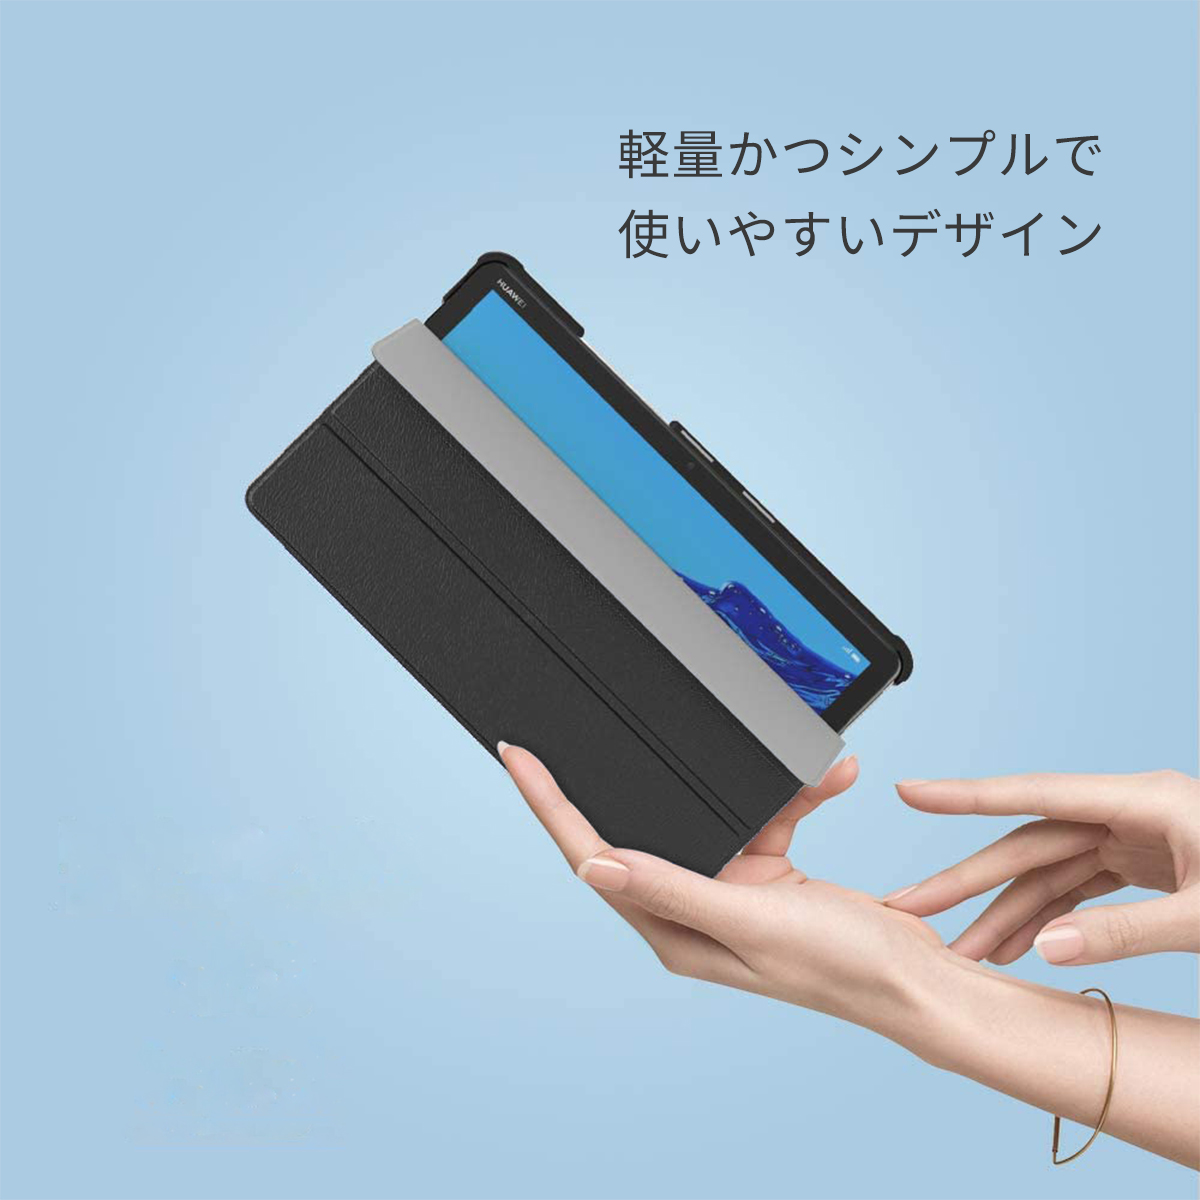 Huawei MediaPad M5 lite 8.0 タブレット ケース カバー ファーウェイ メディアパッド 8.0インチ タブレット 対応  フラップ マグネット内蔵 軽量 シンプル 三つ折りスタンド ブラック 黒 | MY WAY SMART 楽天市場店